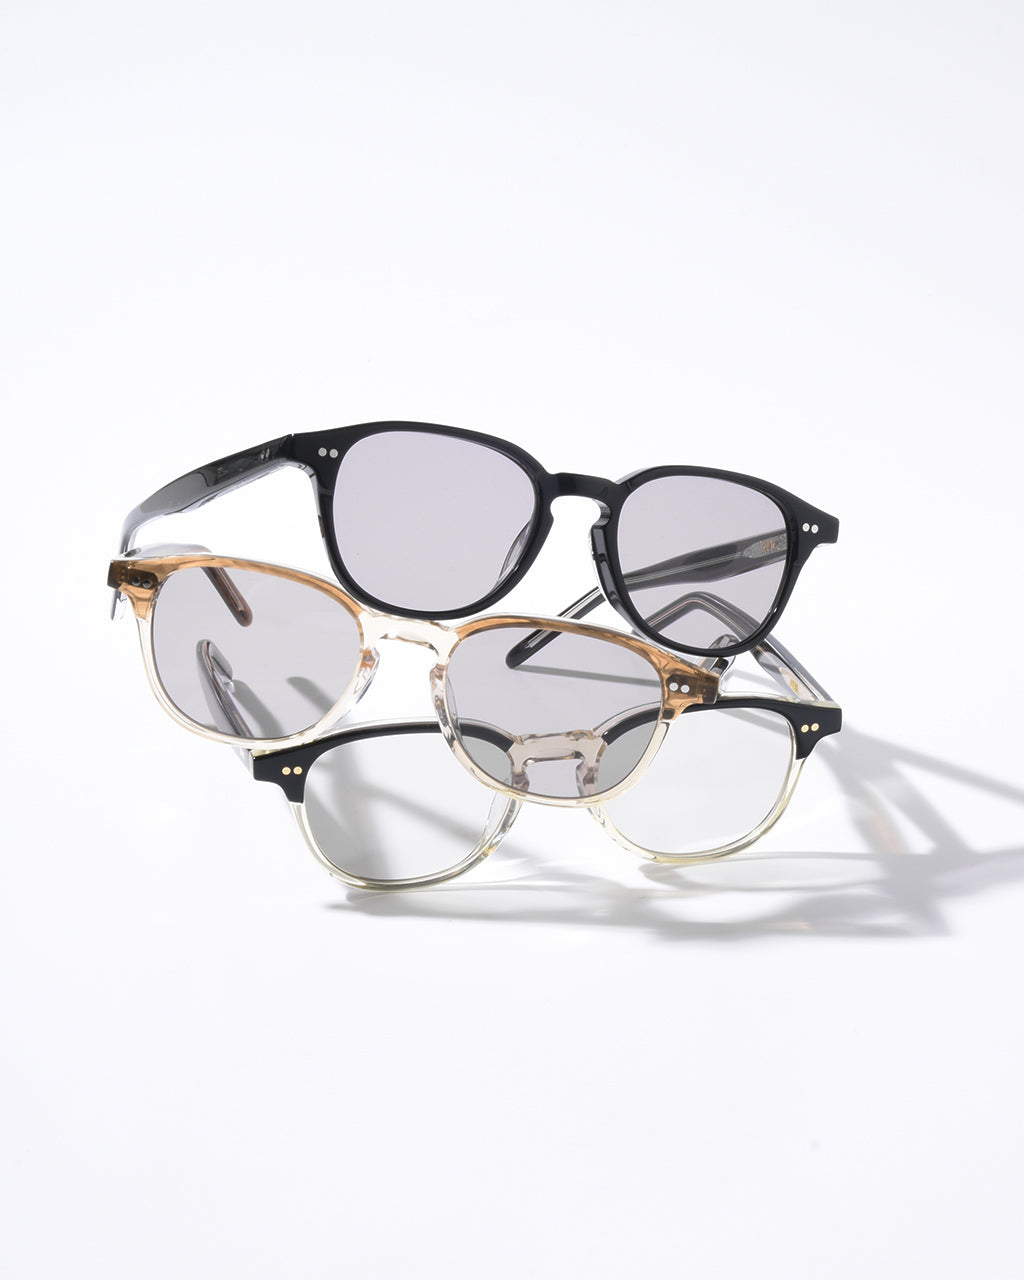 NEW. ニュー ニュー アレン II  ALLEN II ウェリントン型 サングラス 眼鏡 めがね 伊達メガネ カラーレンズ 【送料無料】